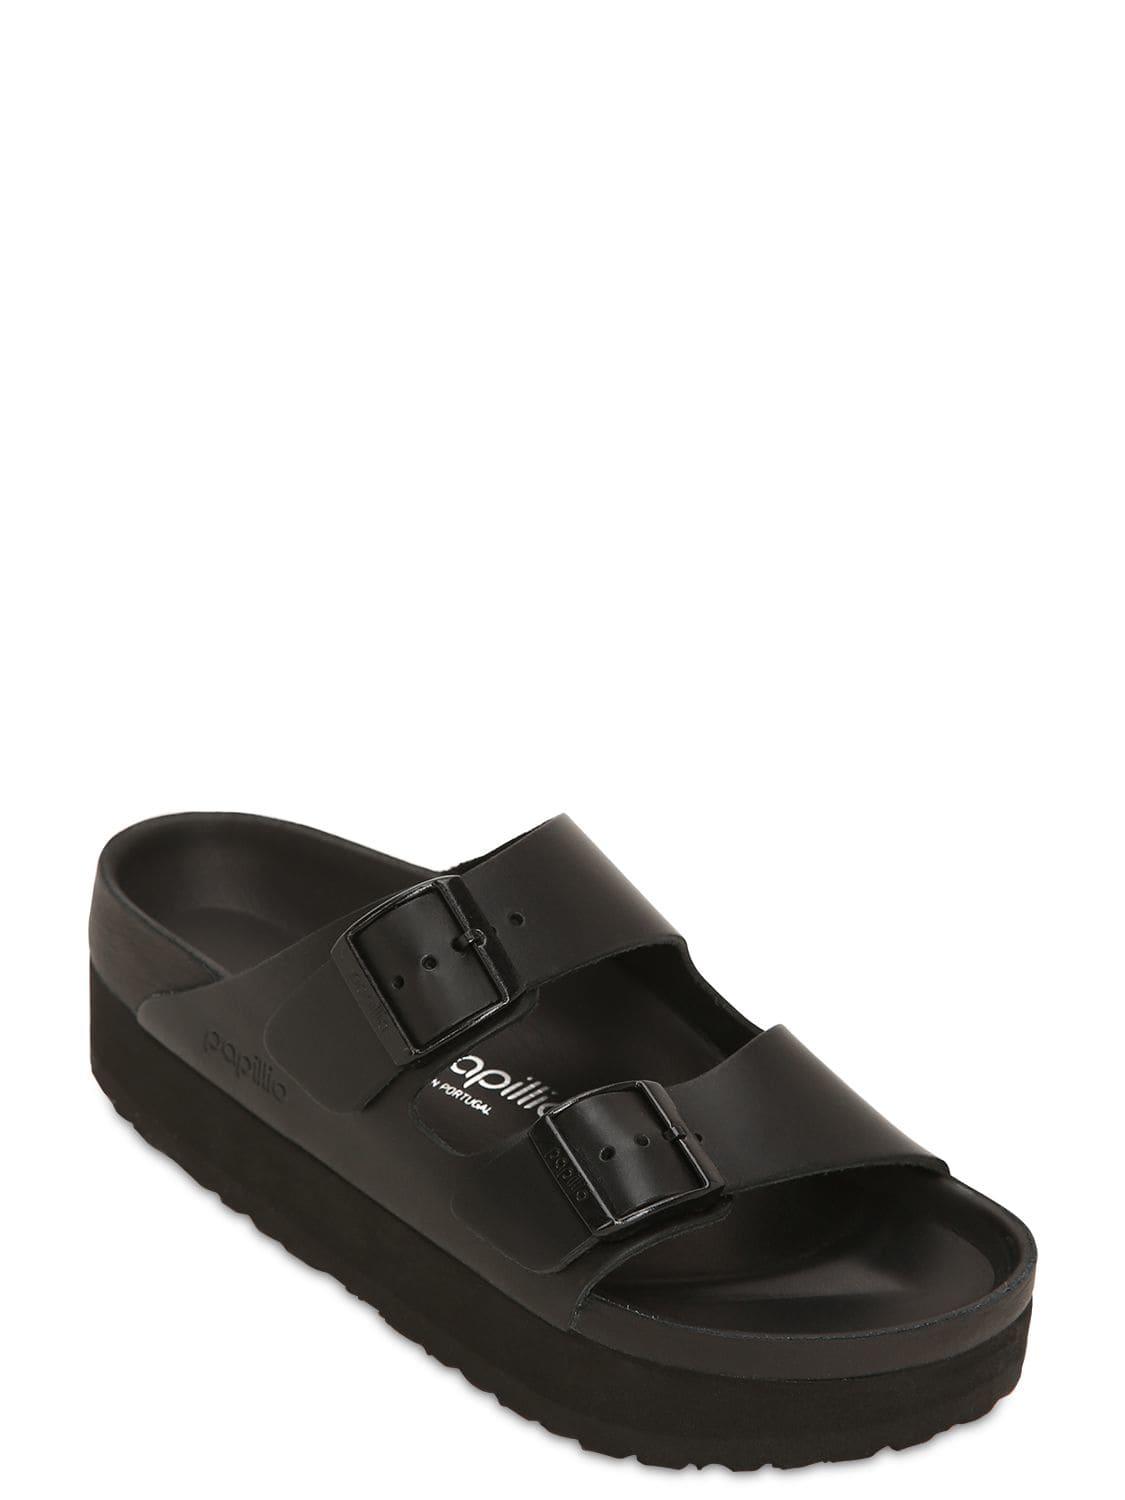 Birkenstock Papillio Arizona Platform Sandals in Black | Lyst UK